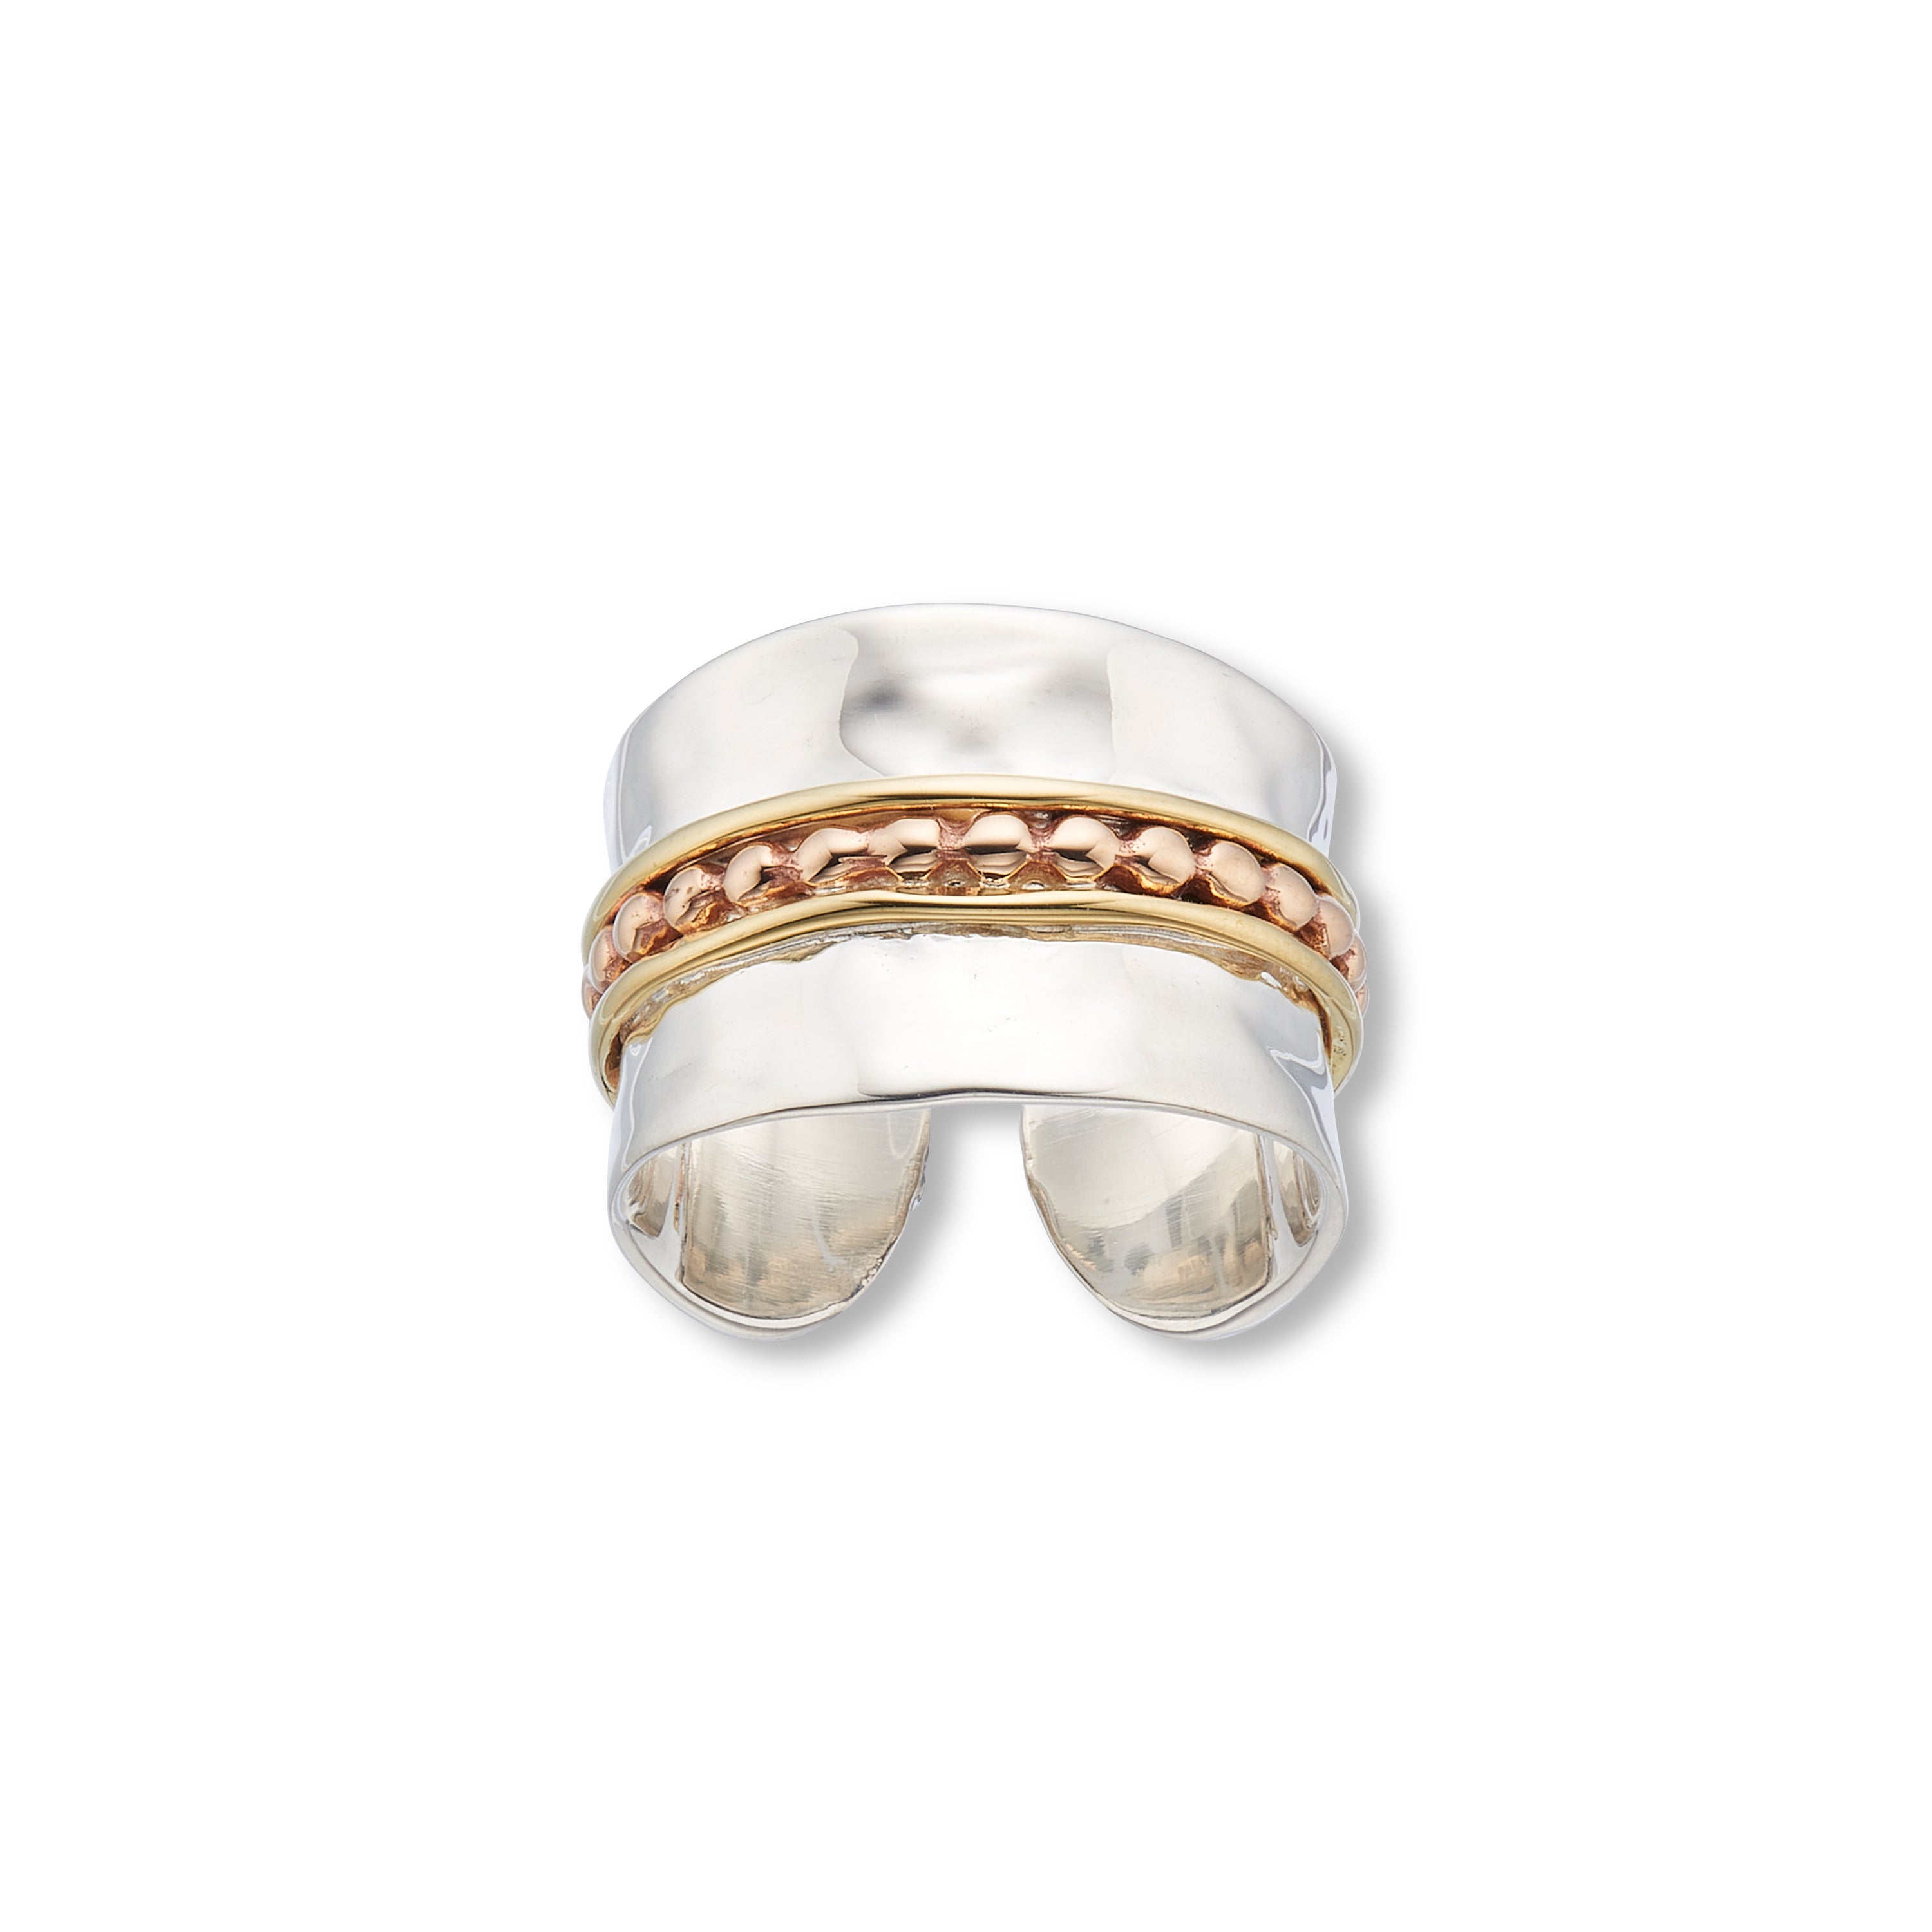 Thalassophile (ocean lover) ring (adjustable)